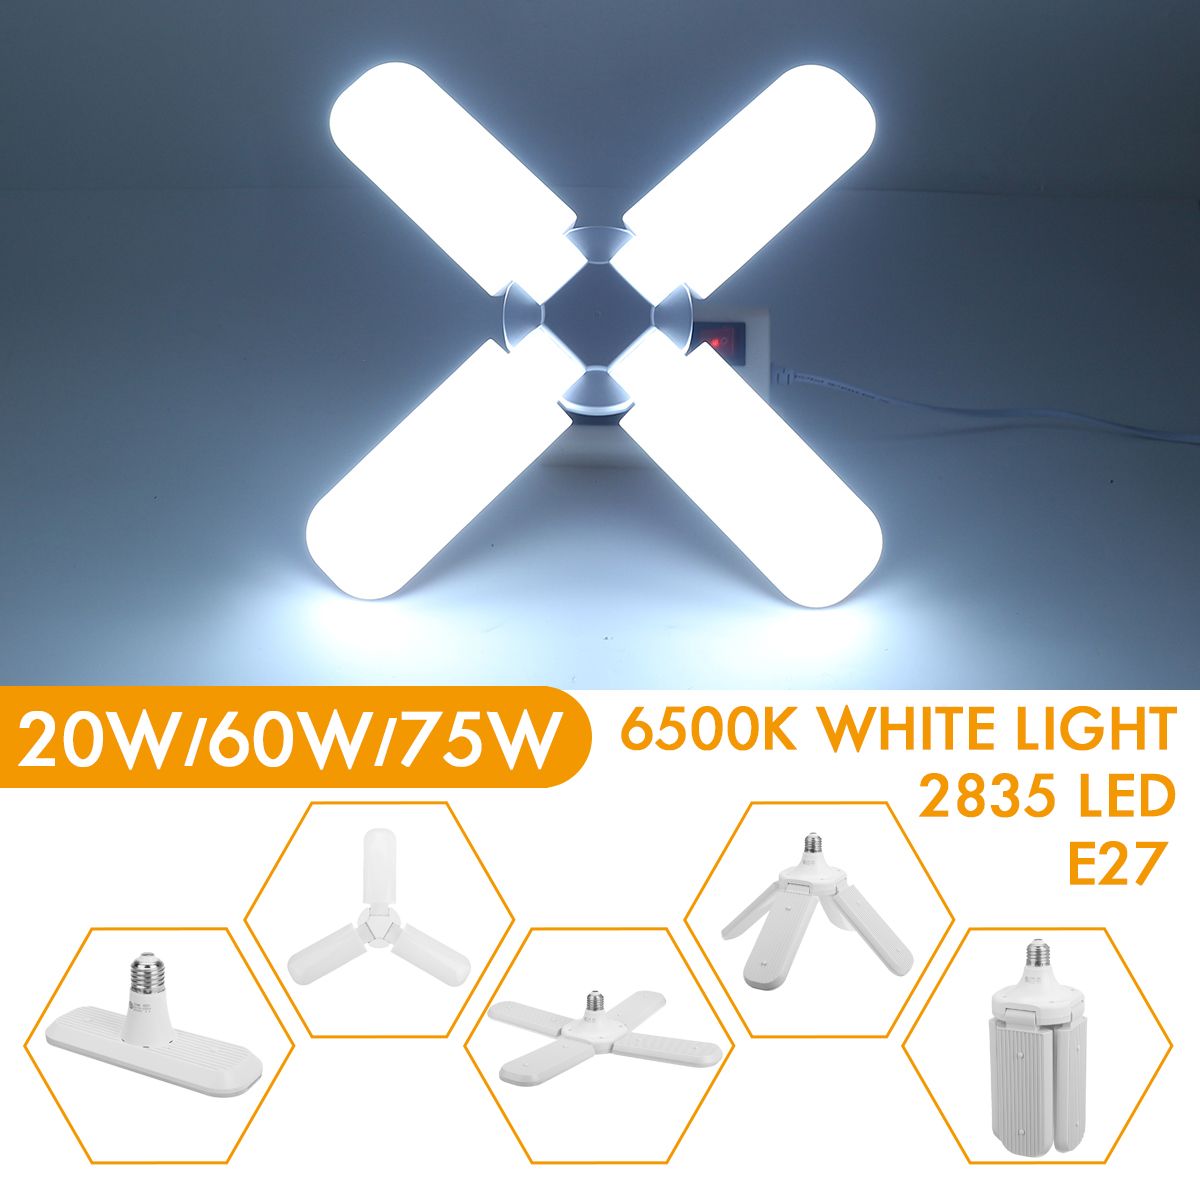 Industrial-Lamp-Super-Bright-Industrial-Lighting-75W-E27-Led-Fan-Garage-Light-6000LM-110-265V-2835-L-1705830